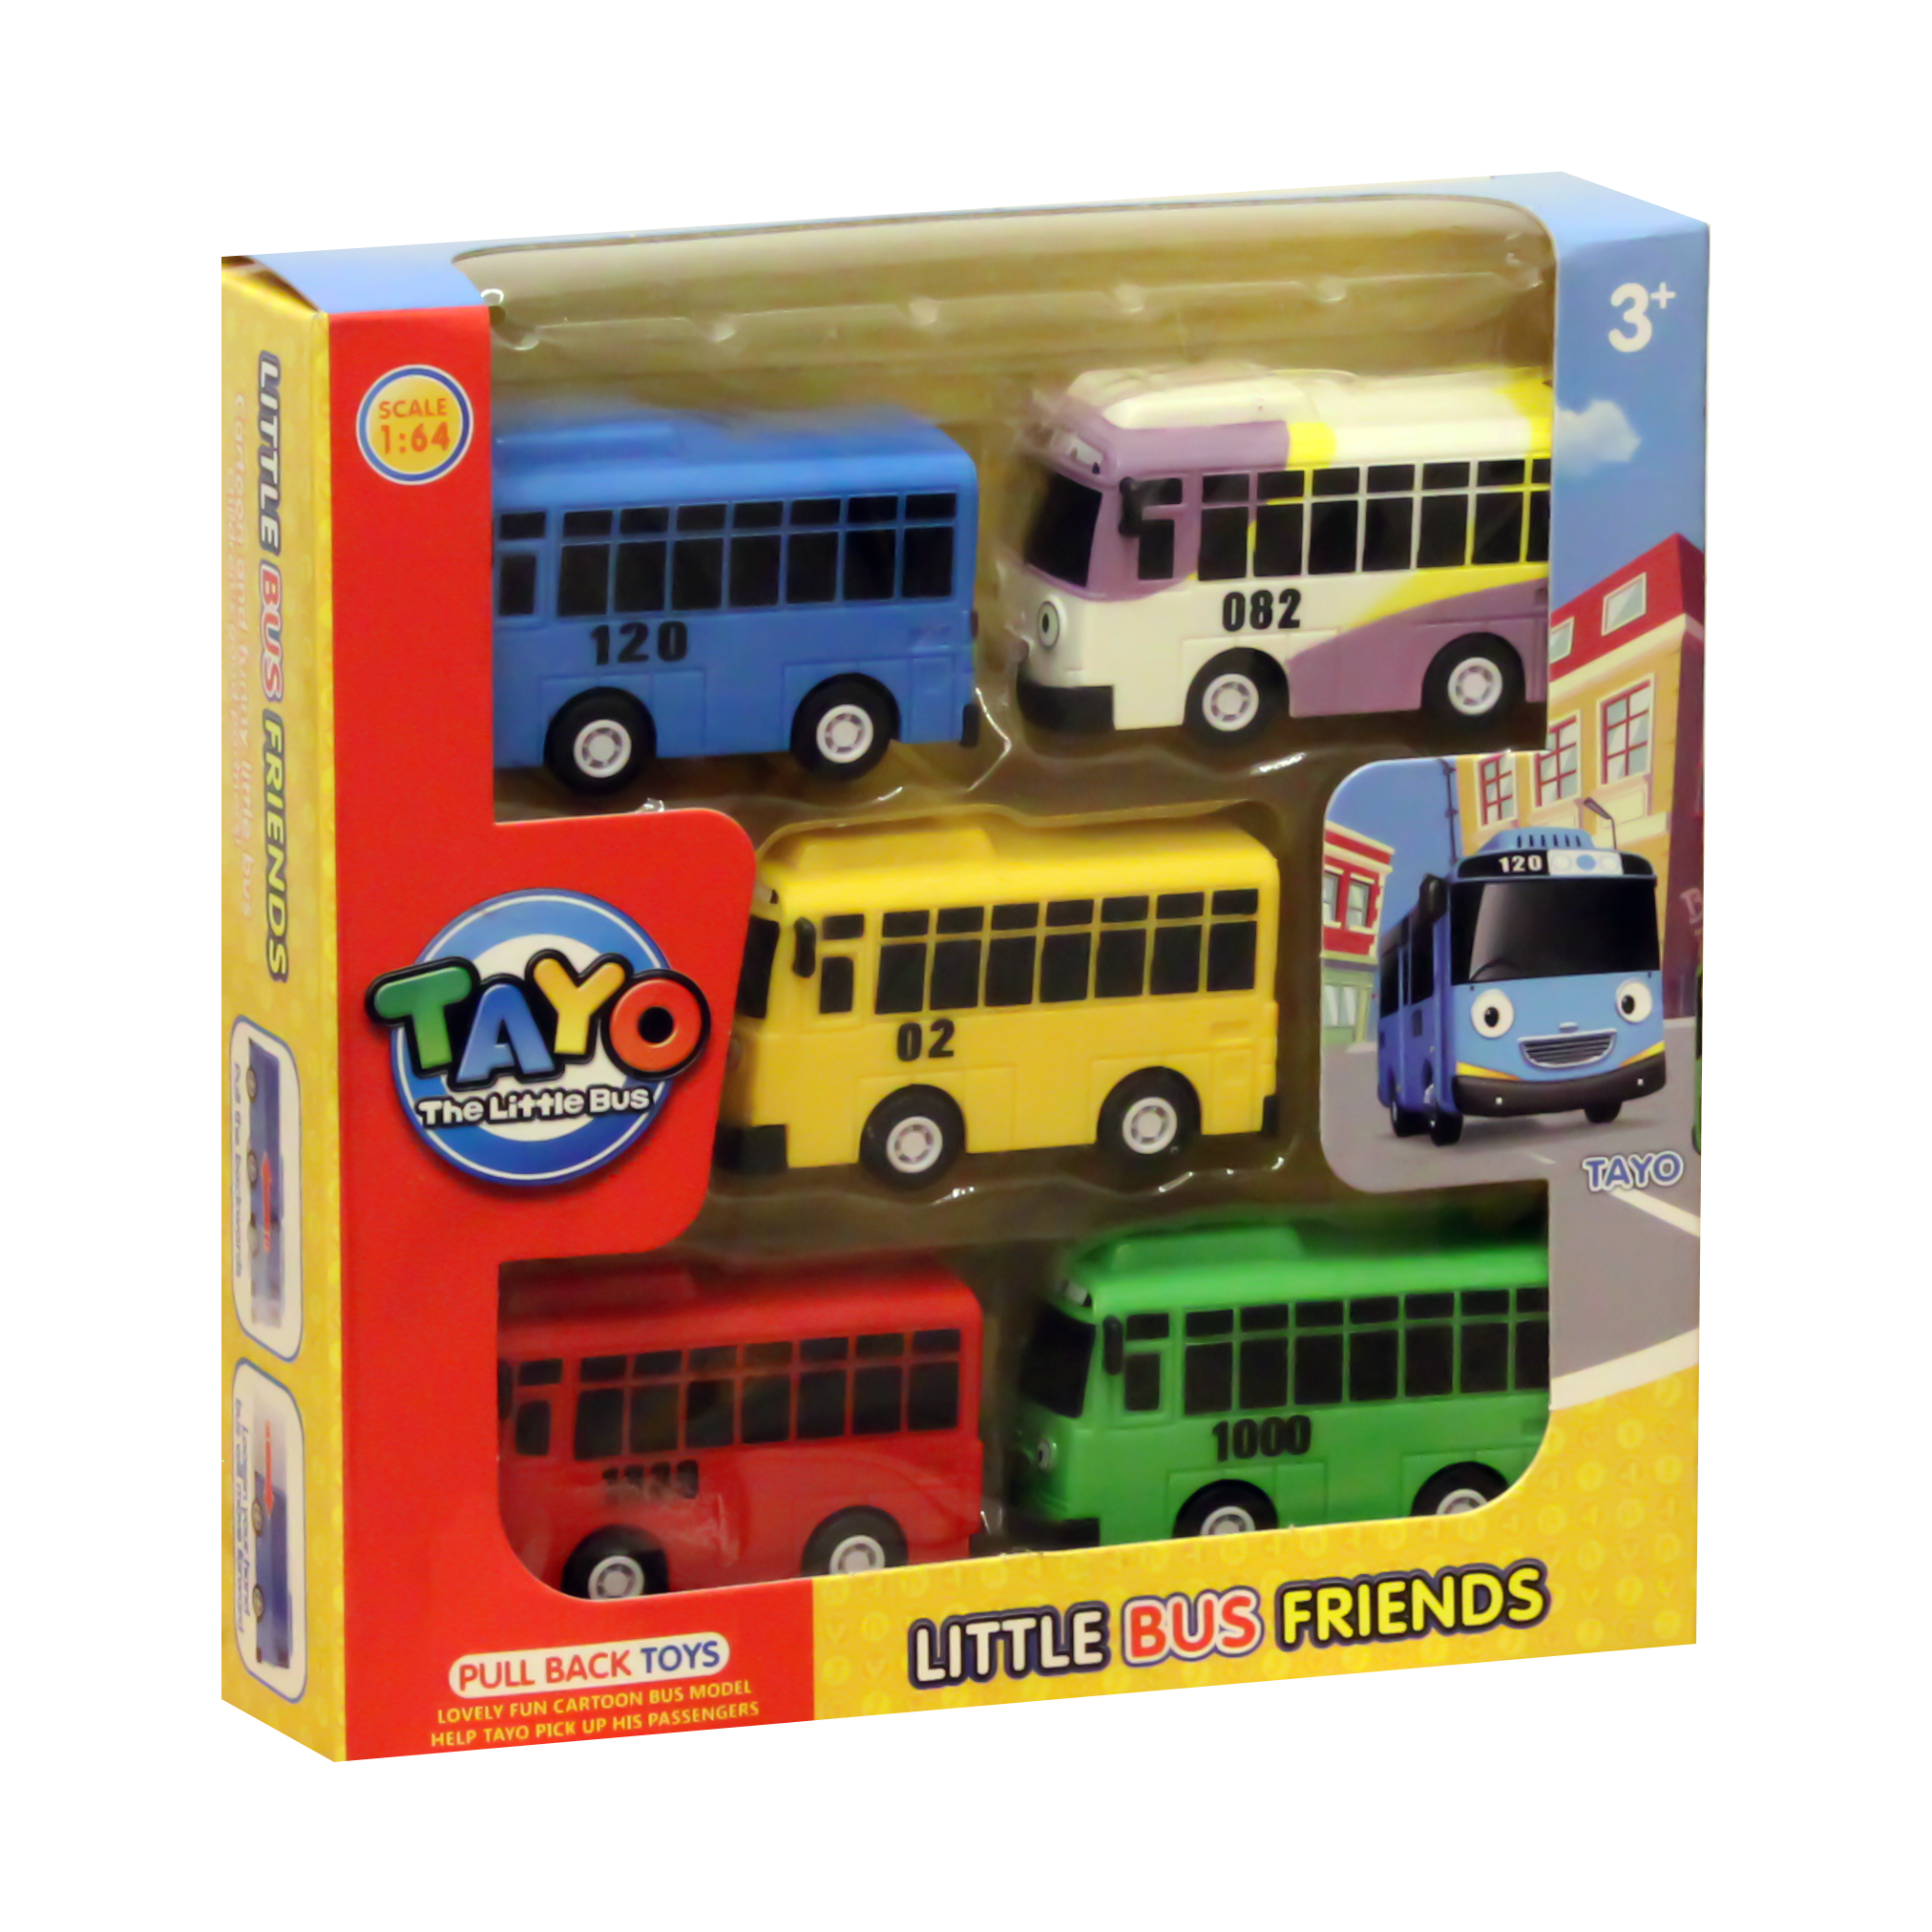 TAYO Little Bus Toy Mainan Kanak Bus sekolah No Light No Sound 5 in 1 set little tayo bus Mainan Bas